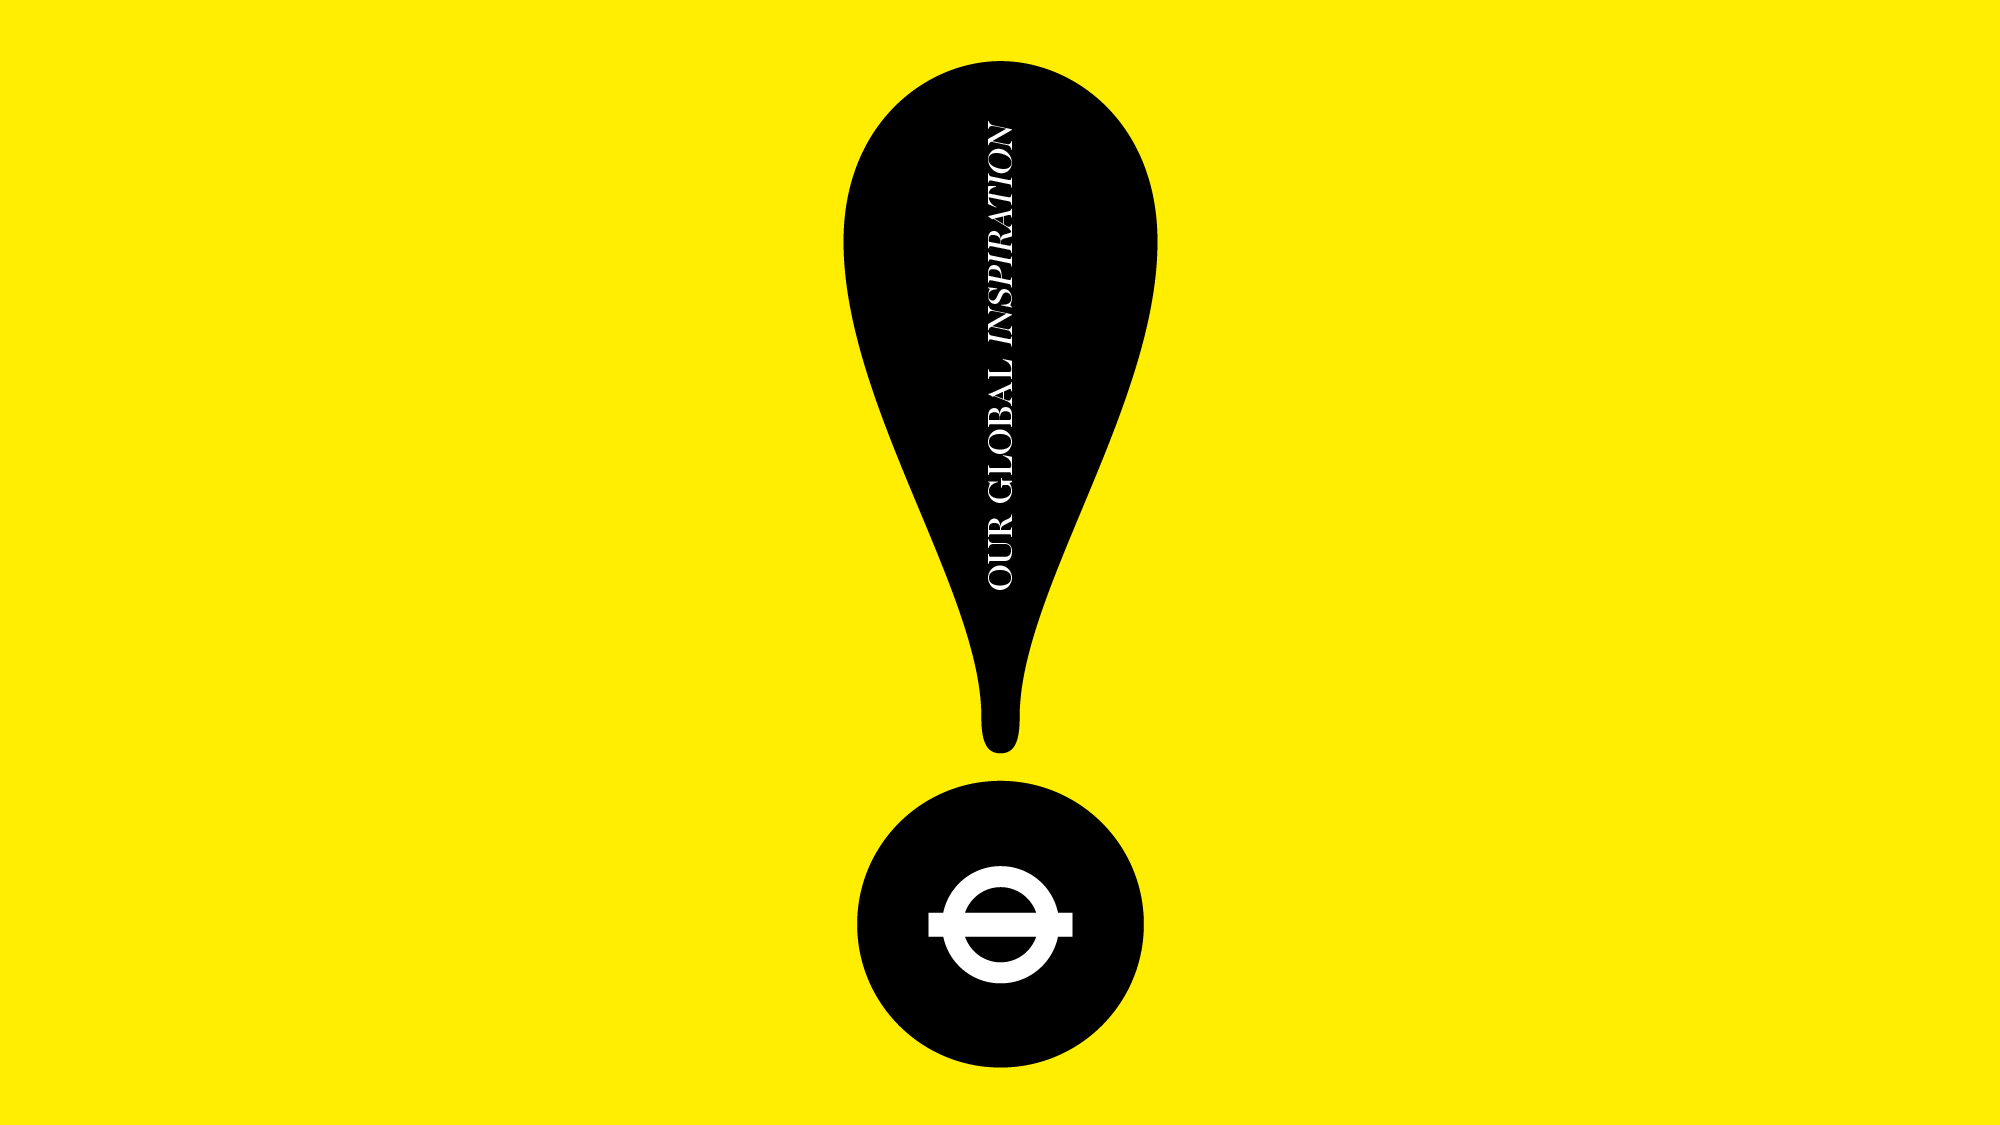 Entity-3-Three-Brand-Design-Agency-Sydney-Transport-for-London-Vision-1-experience-print-type-key-visual